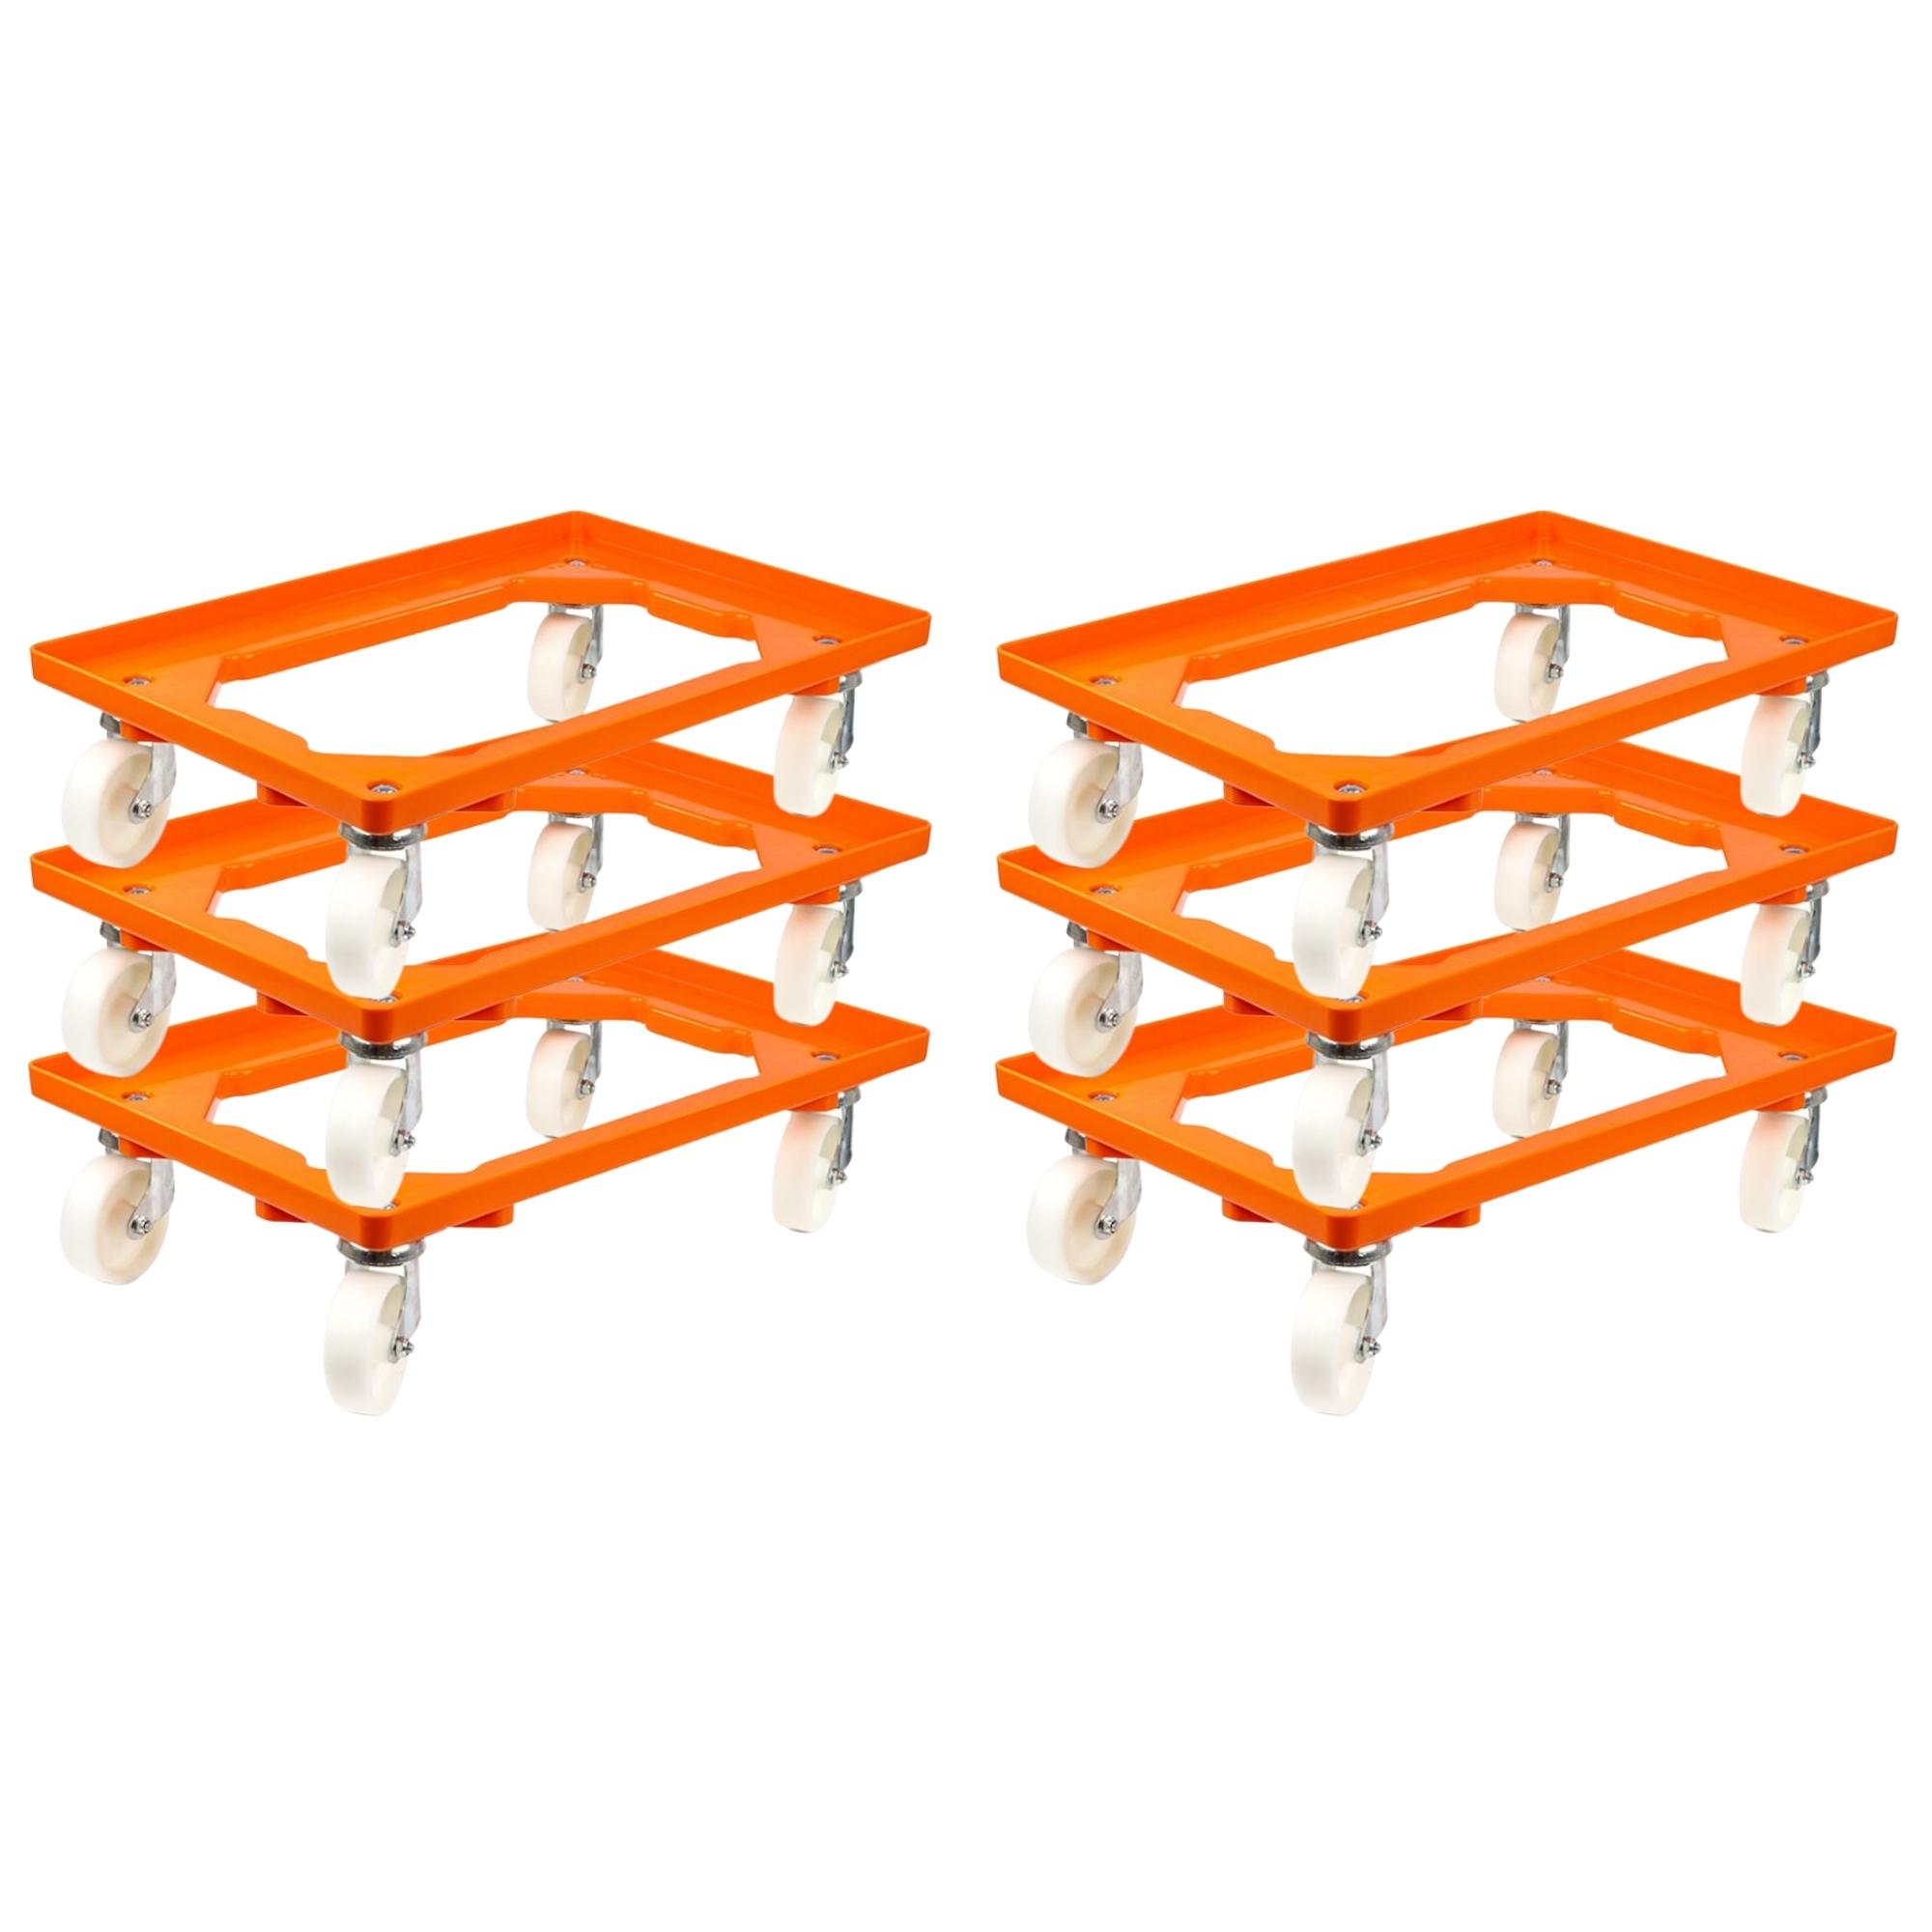 SparSet 6x Transportroller für Euroboxen 60x40cm mit Kunststoffräder orange | Offenes Deck | 2 Lenkrollen & 2 Bockrollen | Traglast 300kg | Kistenroller Logistikroller Rollwagen Profi-Fahrgestell